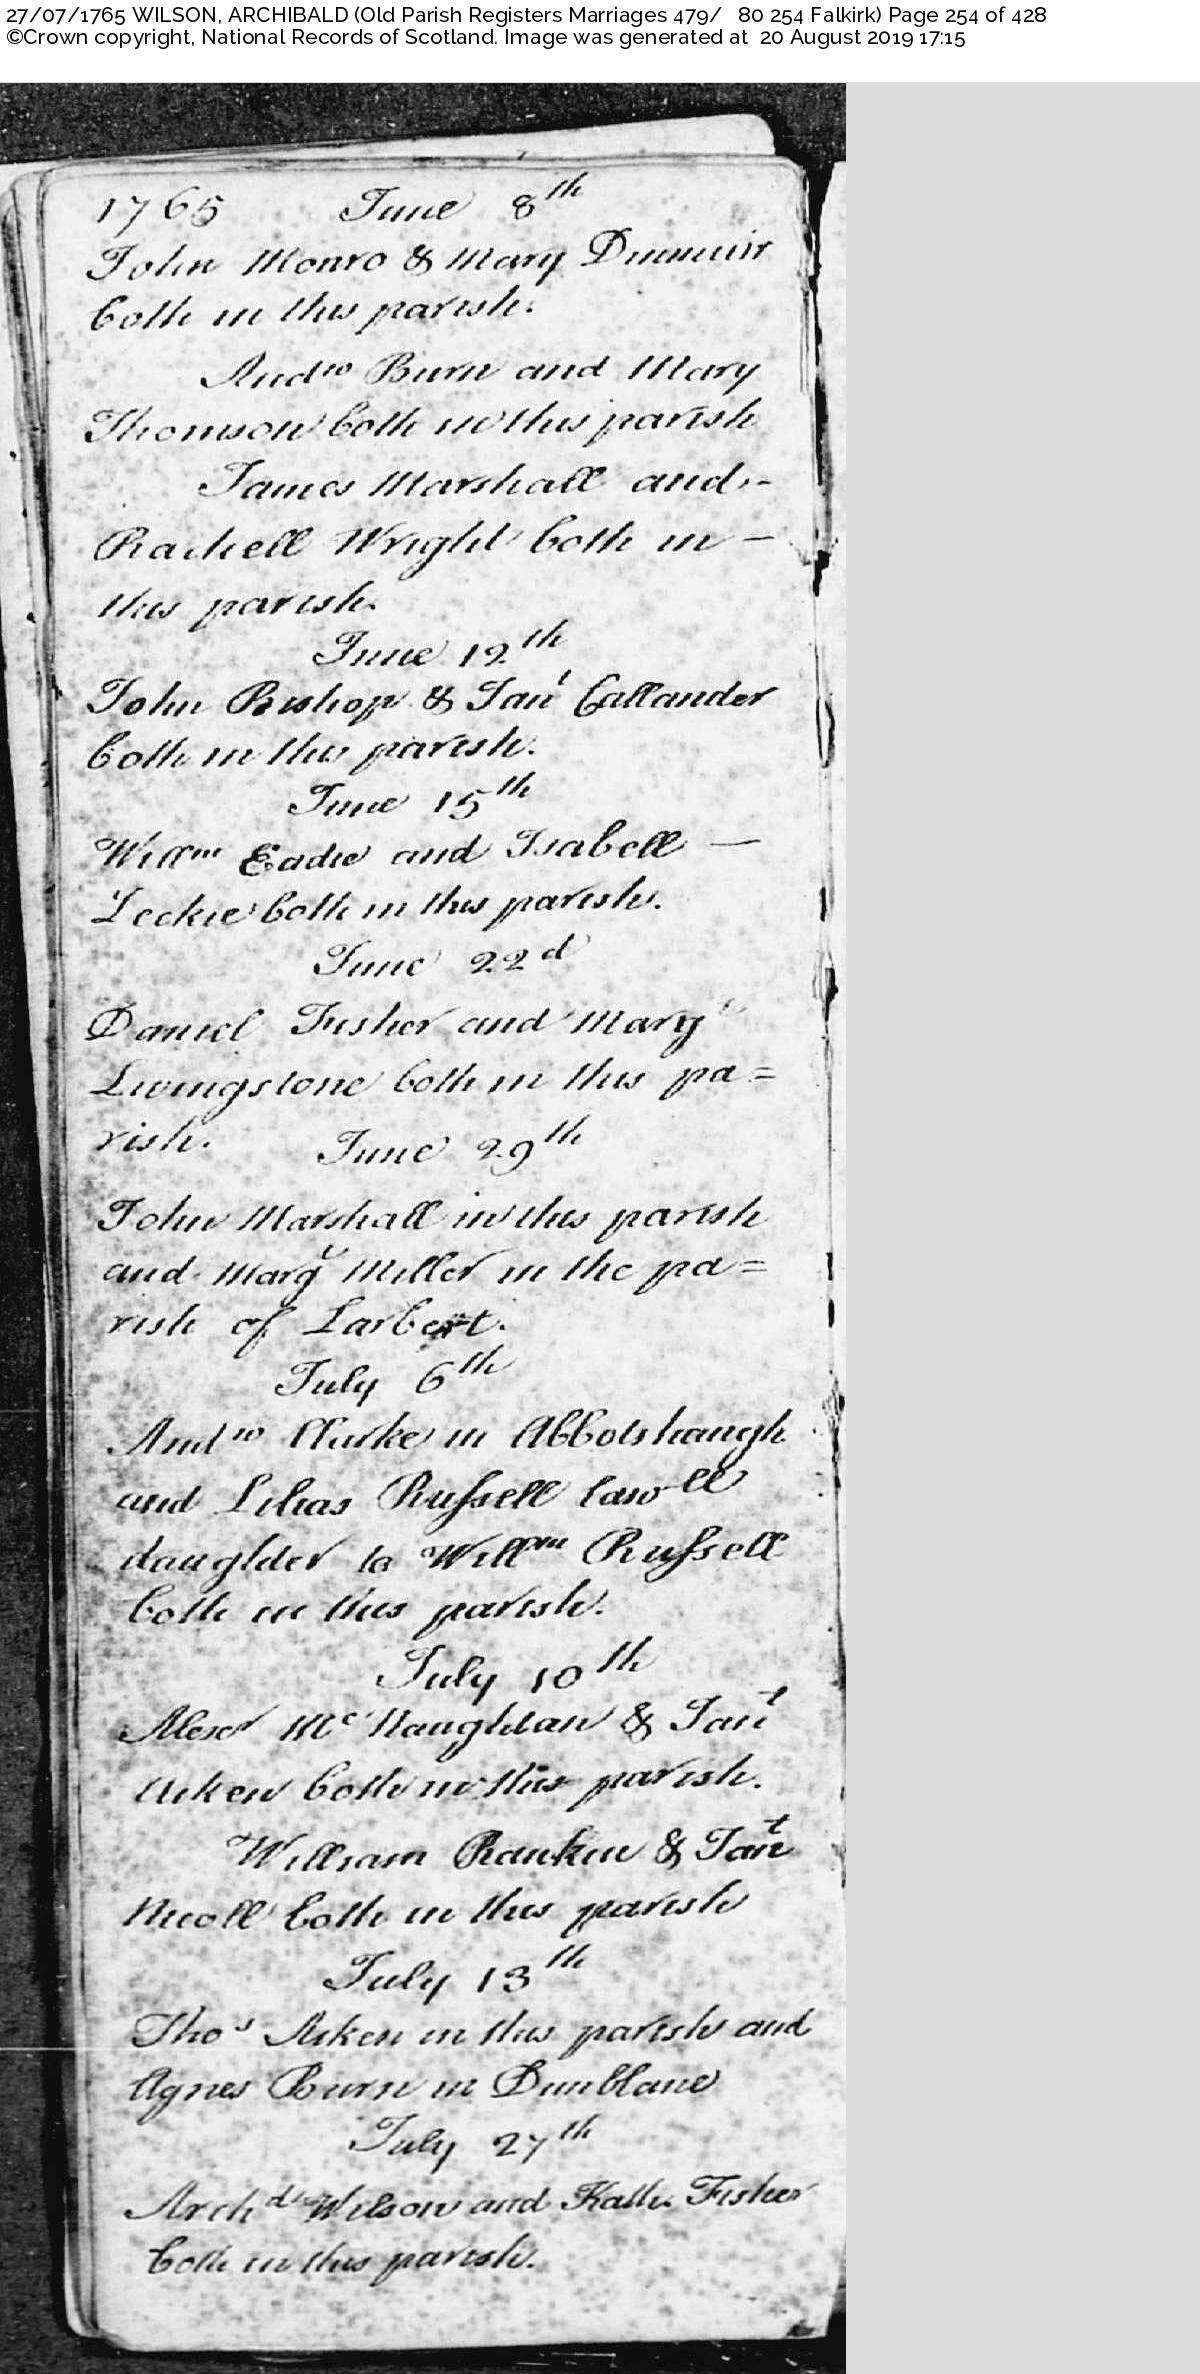 ArchibaldWilson_KatherineFisher_M1765 Falkirk, July 27, 1765